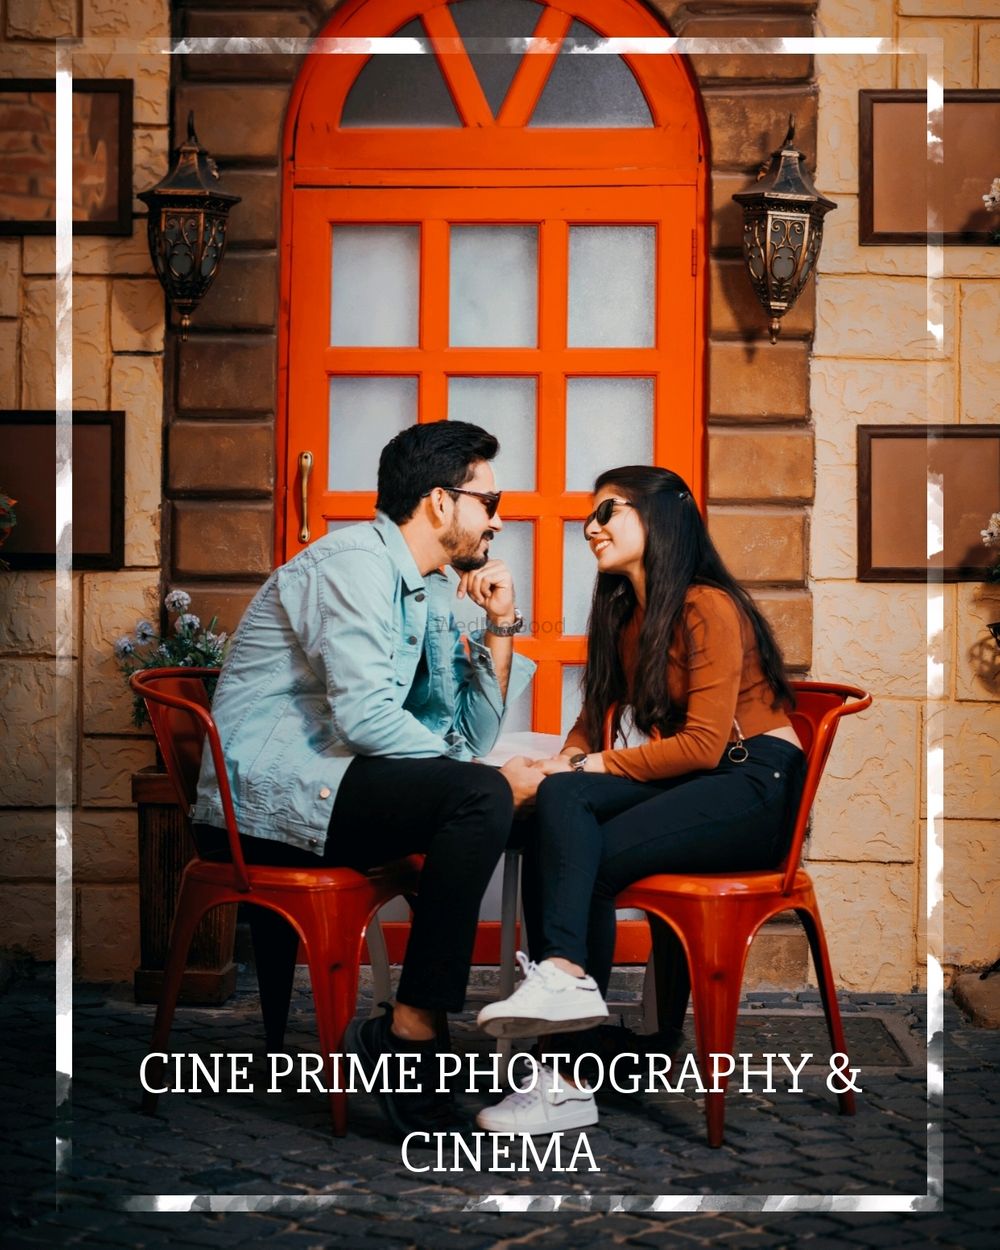 Photo By Cine Prime Photography & Cinema - Cinema/Video